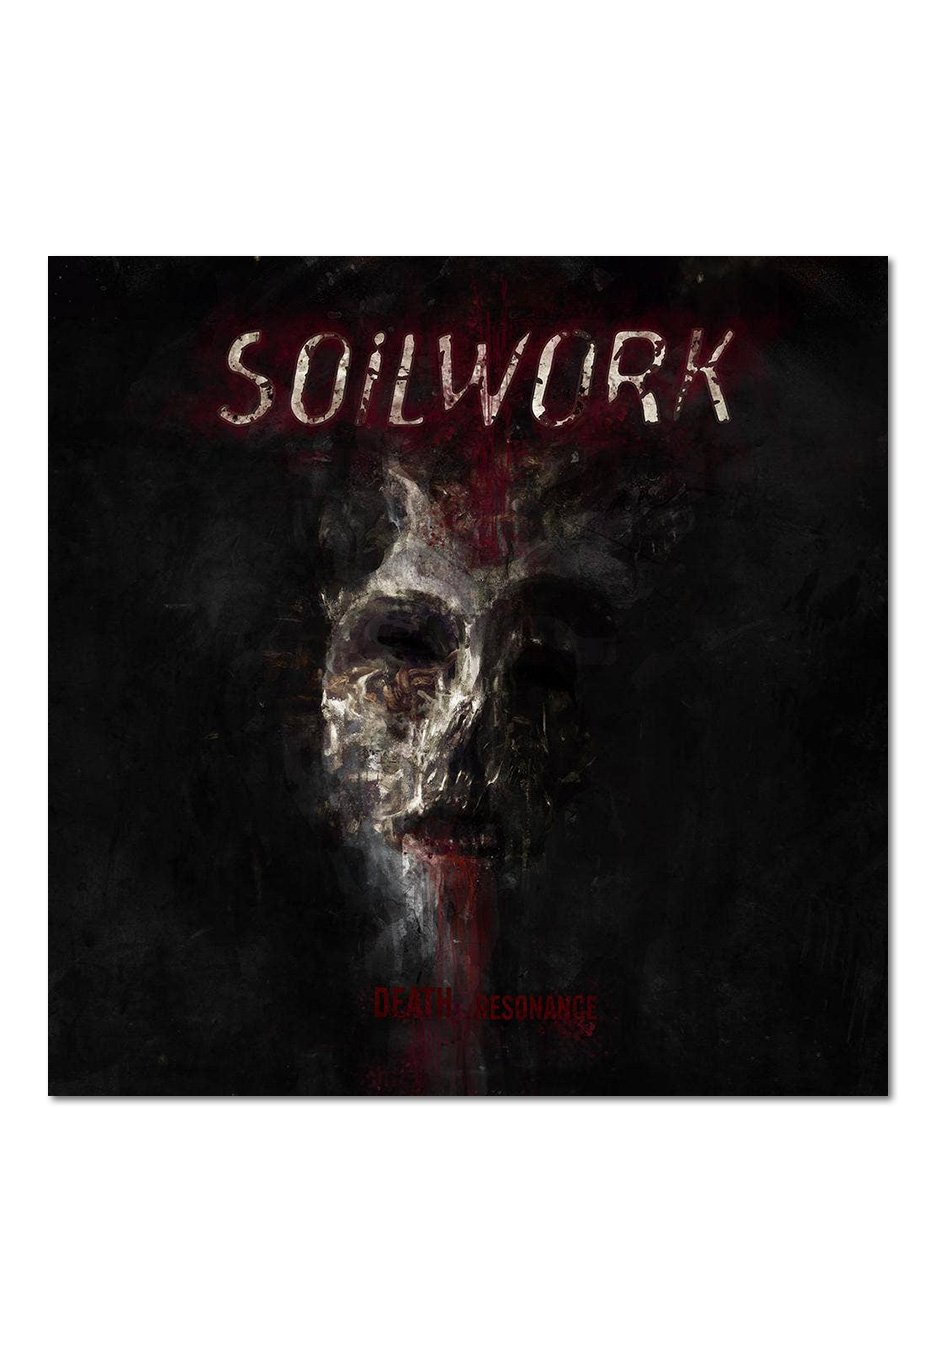 Soilwork - Death Resonance - Digipak CD